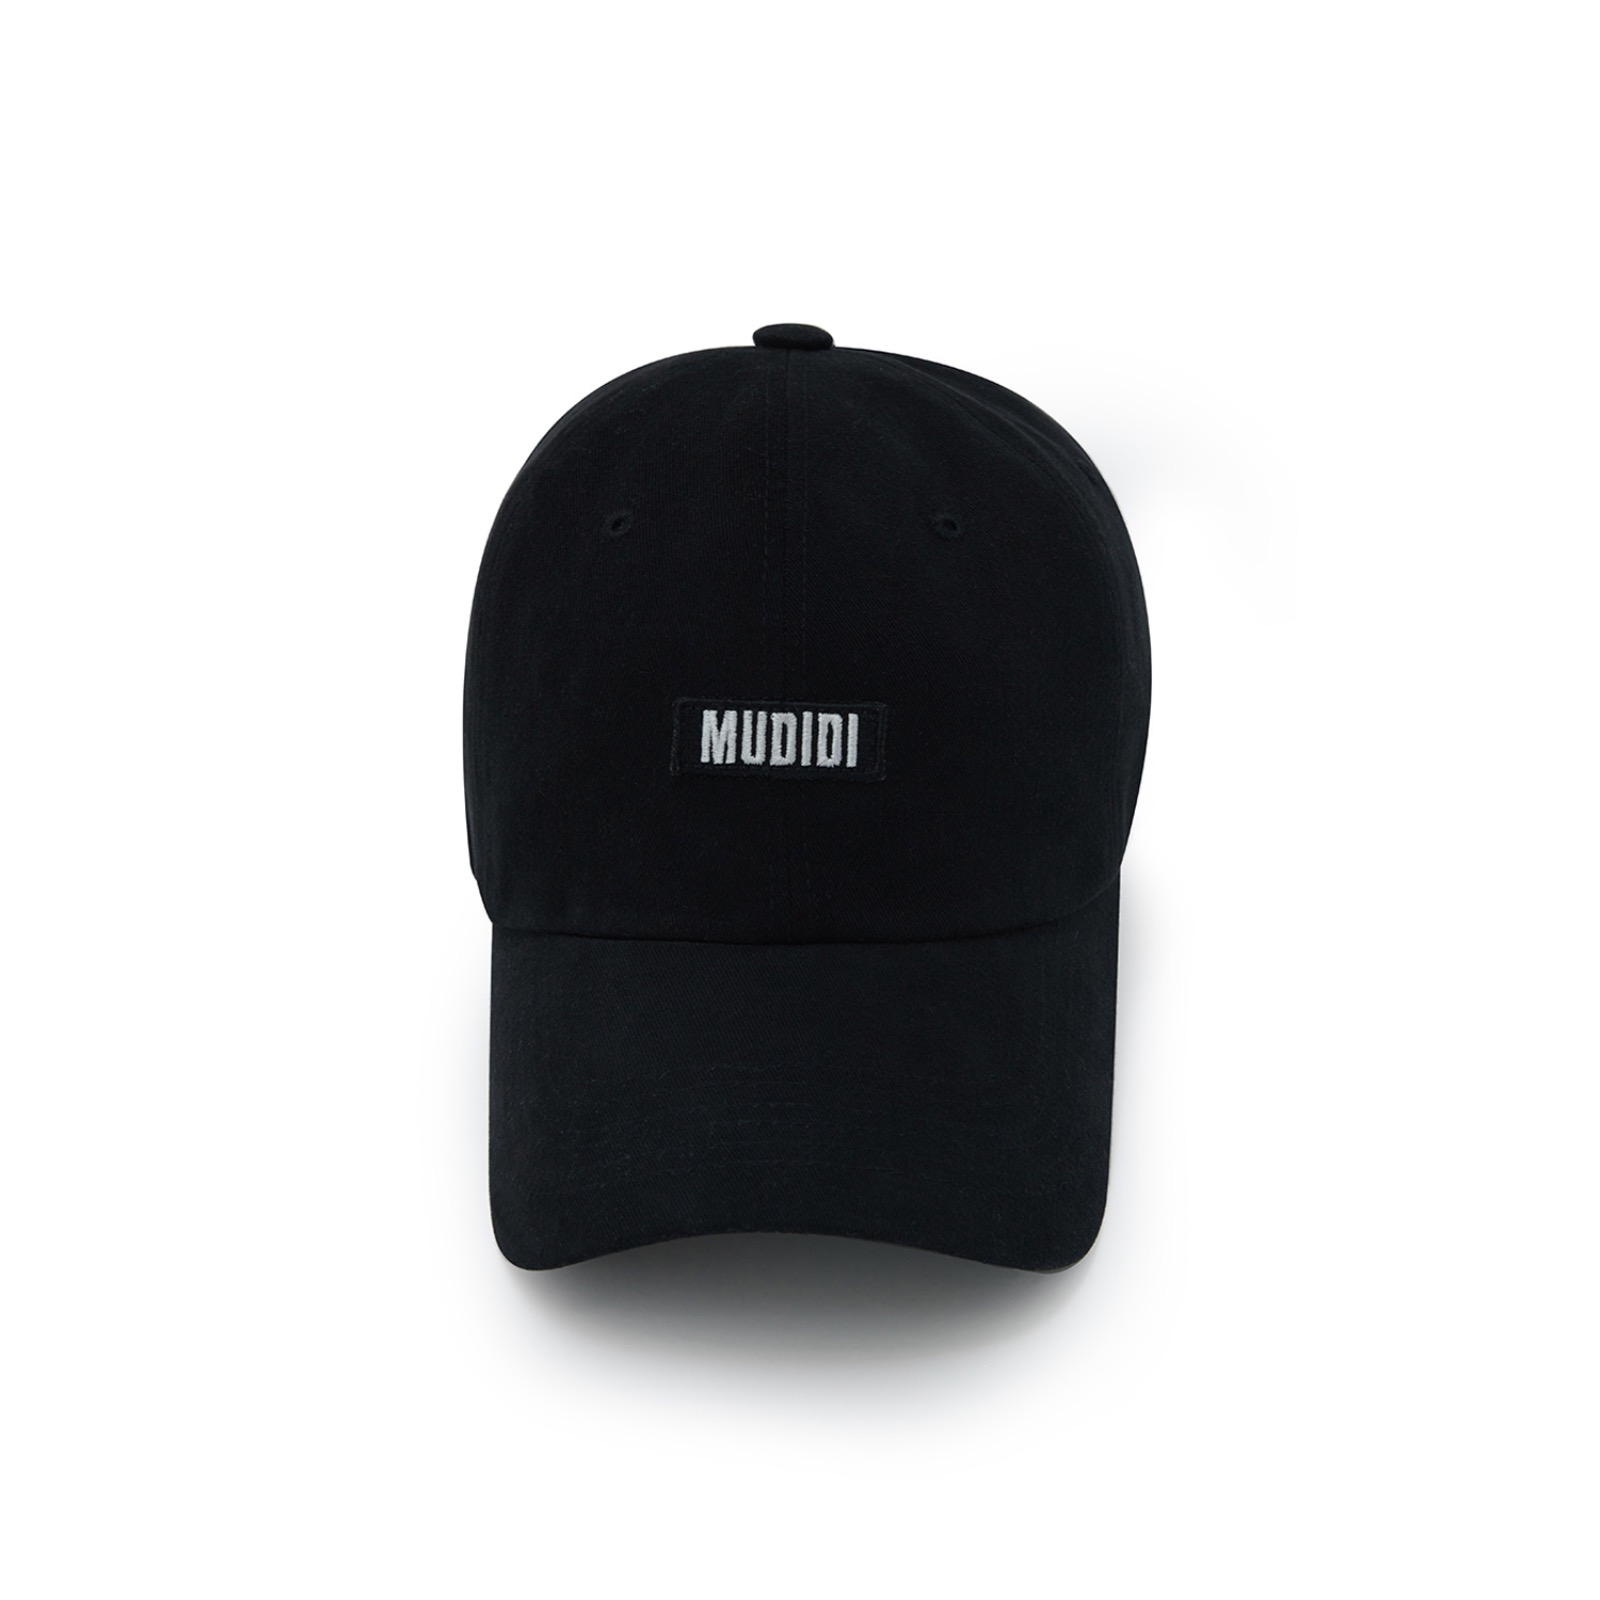 Mudidi basic ball cap 001 Black